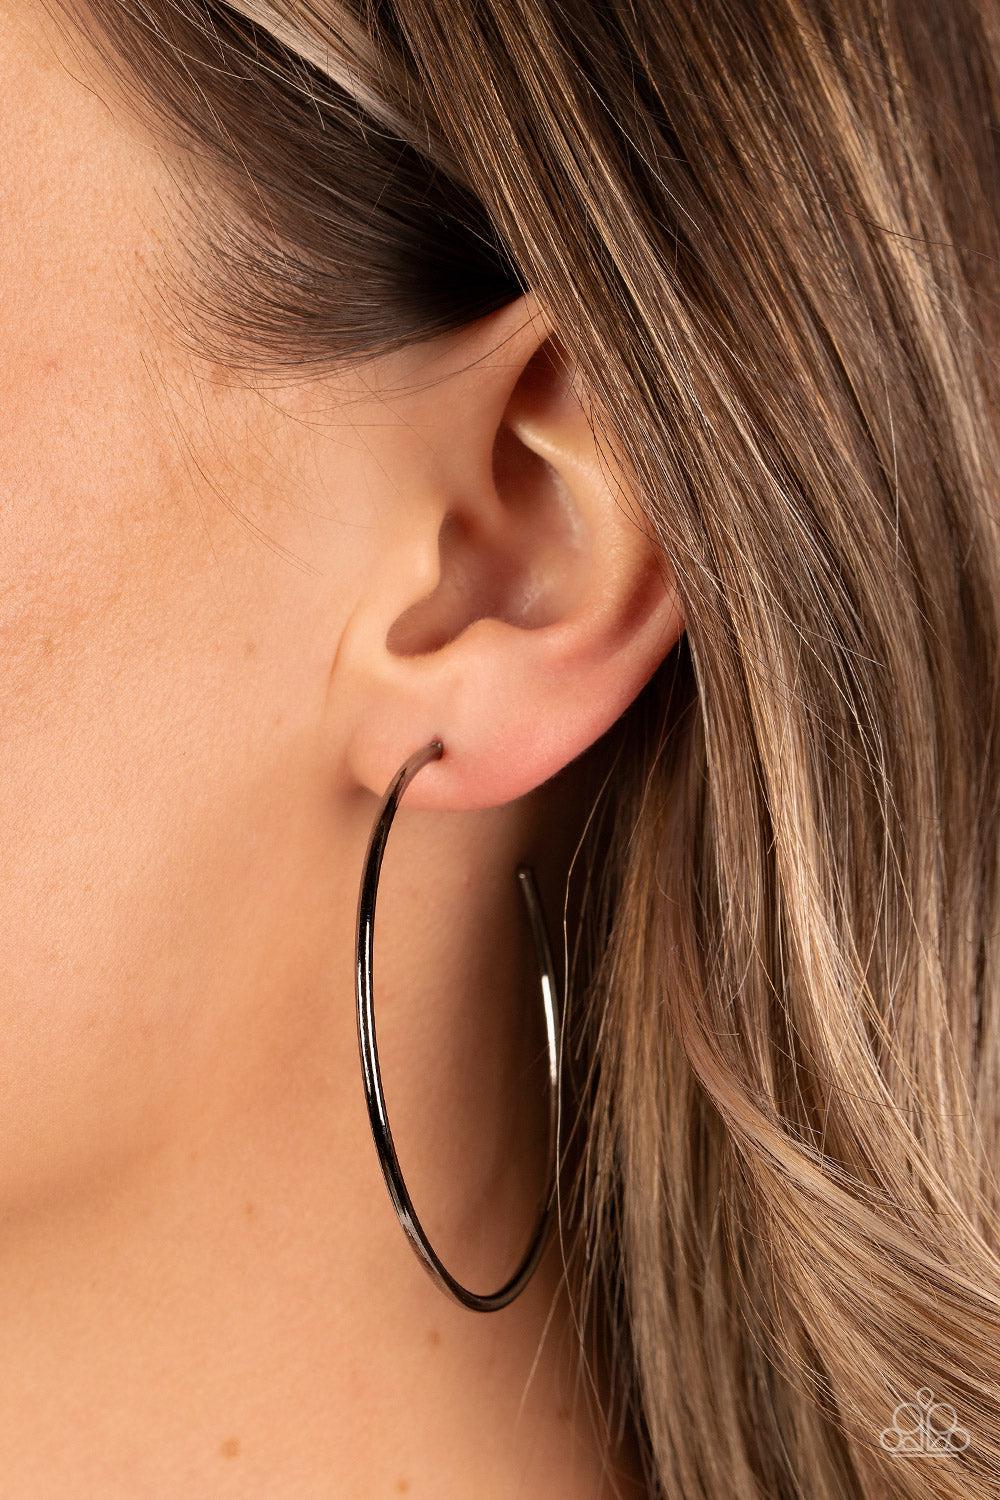 Can I Get a HOOP HOOP Black Hoop Earrings - Paparazzi Accessories-on model - CarasShop.com - $5 Jewelry by Cara Jewels